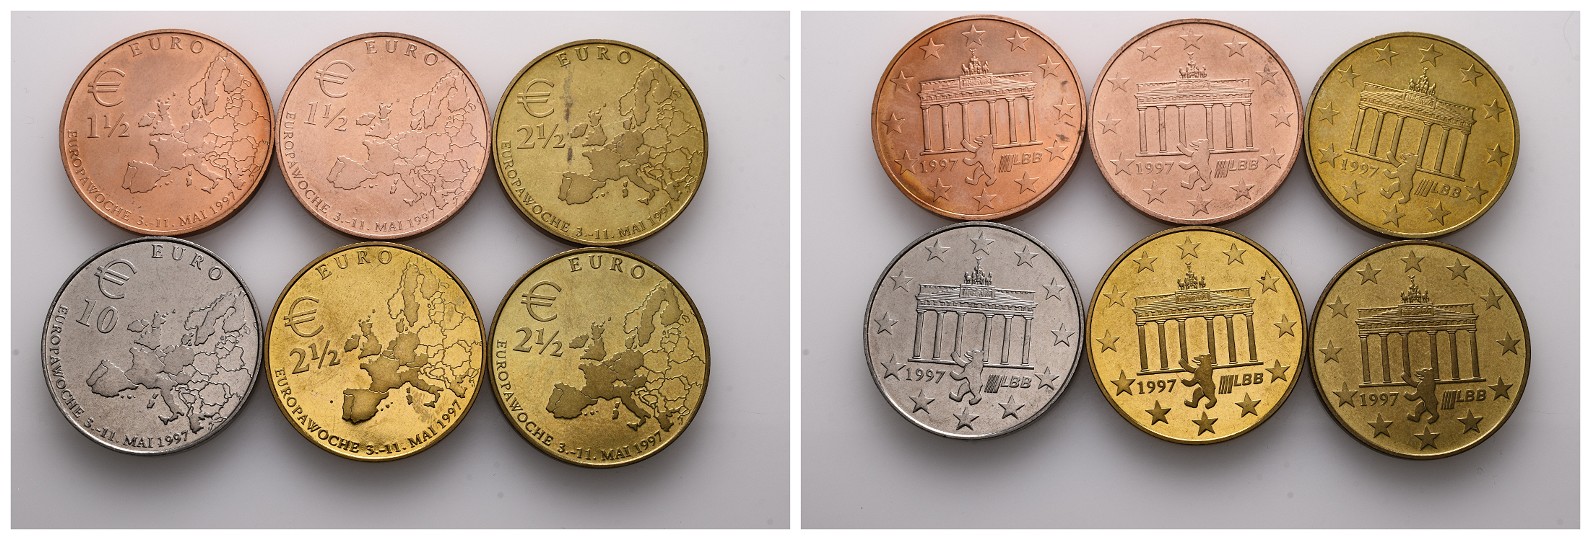  MGS Belgien KMS Gedenkmünzensatz Euroländer 3,88 Euro in Hardcover   